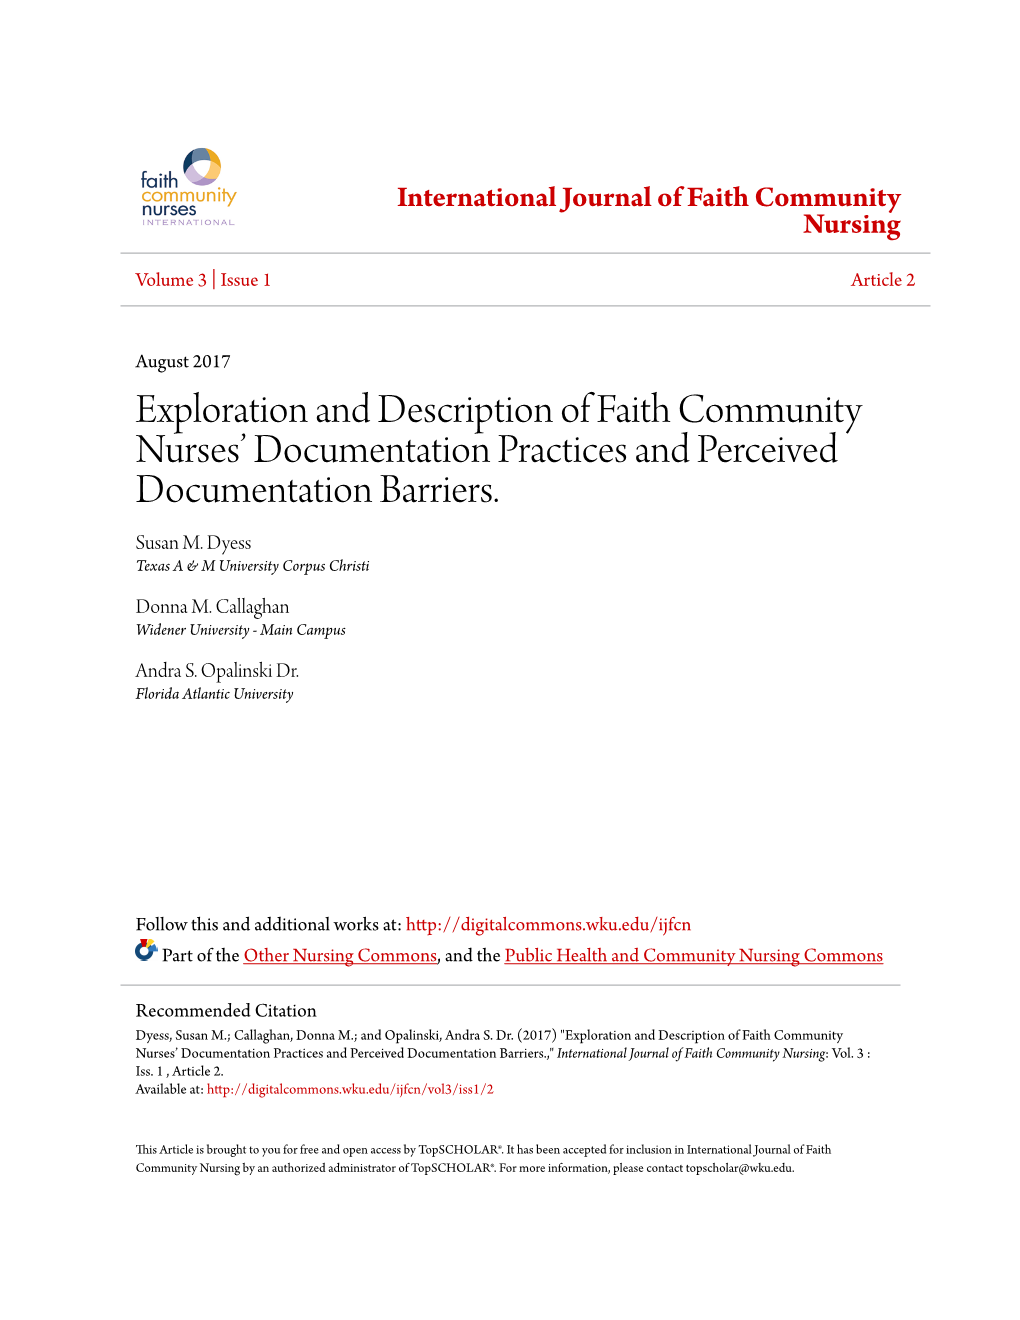 Exploration and Description of Faith Community Nurses' Documentation